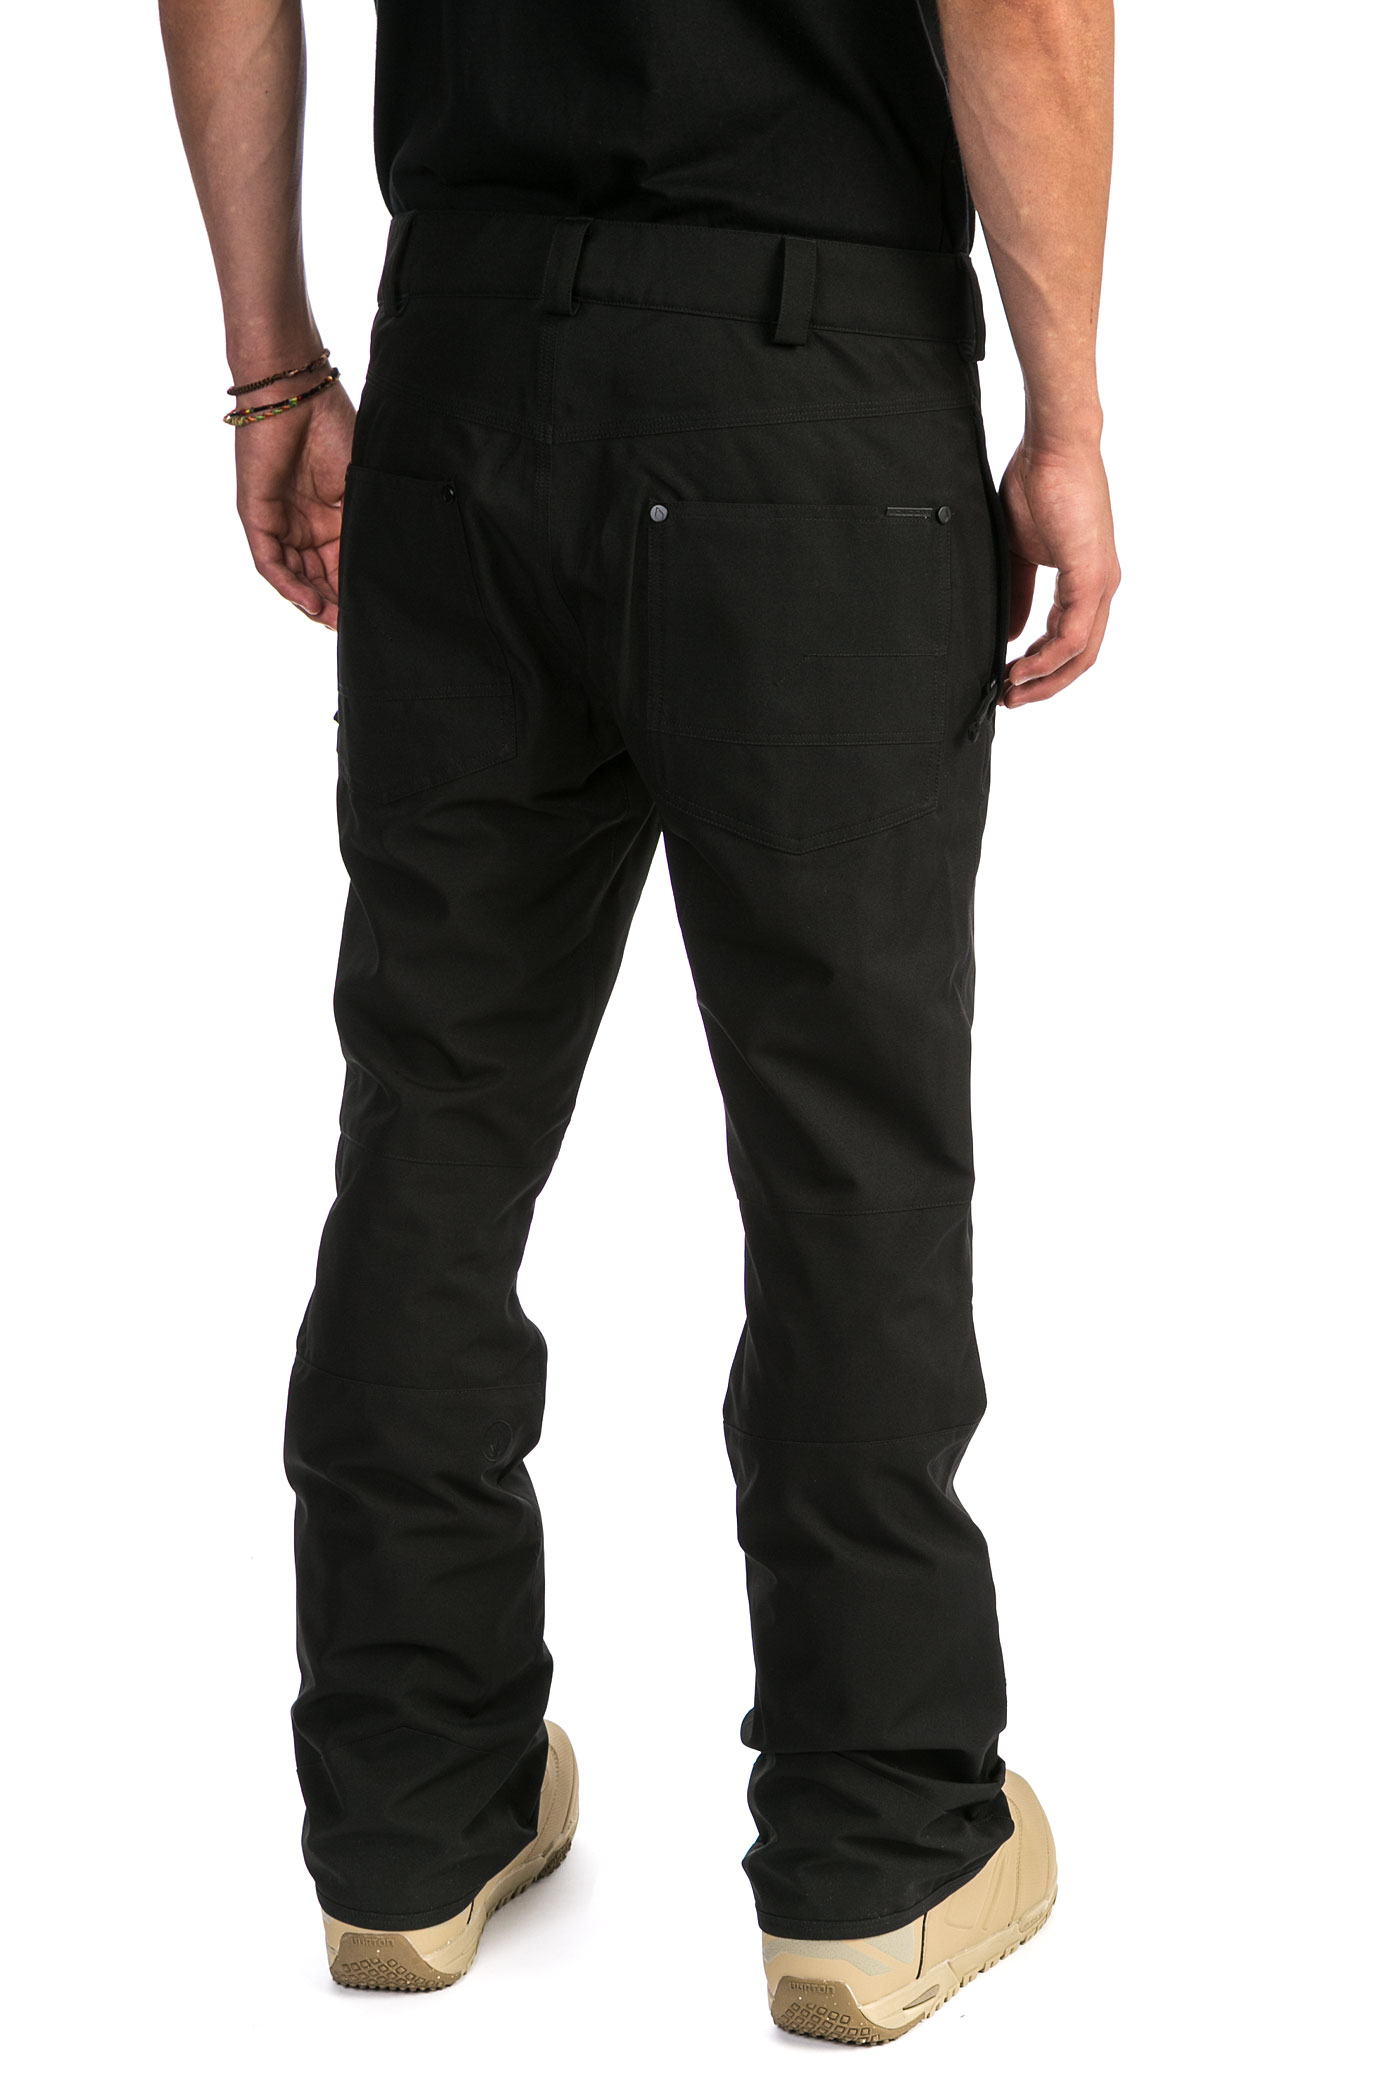 Volcom Klocker Tight Snowboard Pant (black) buy at skatedeluxe